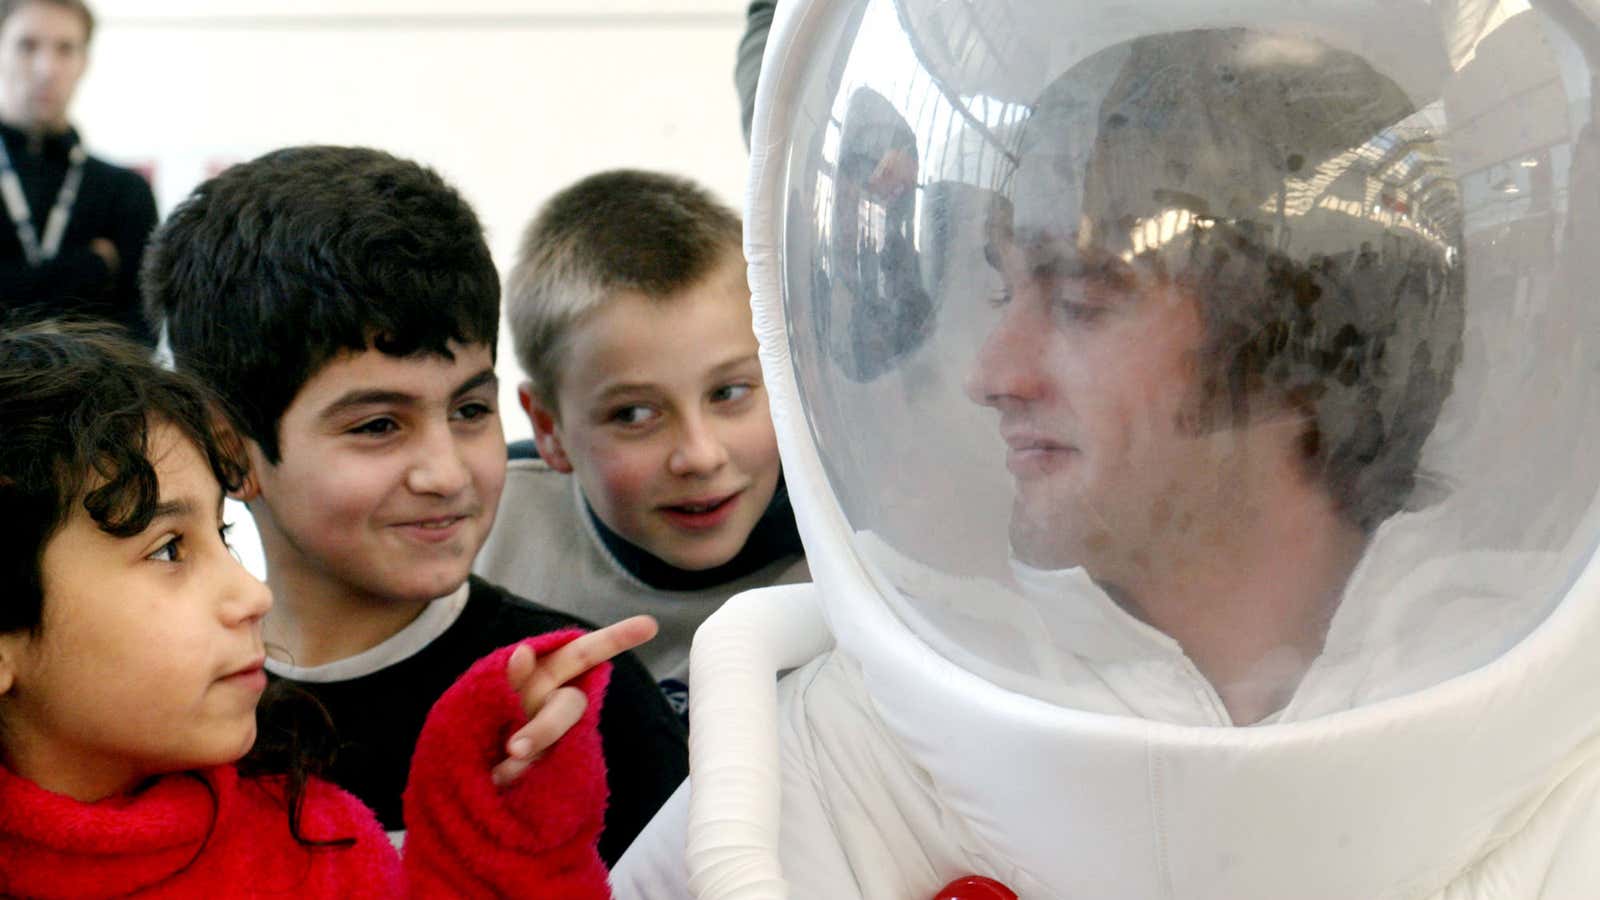 Boys across the world dream of being an astronaut.